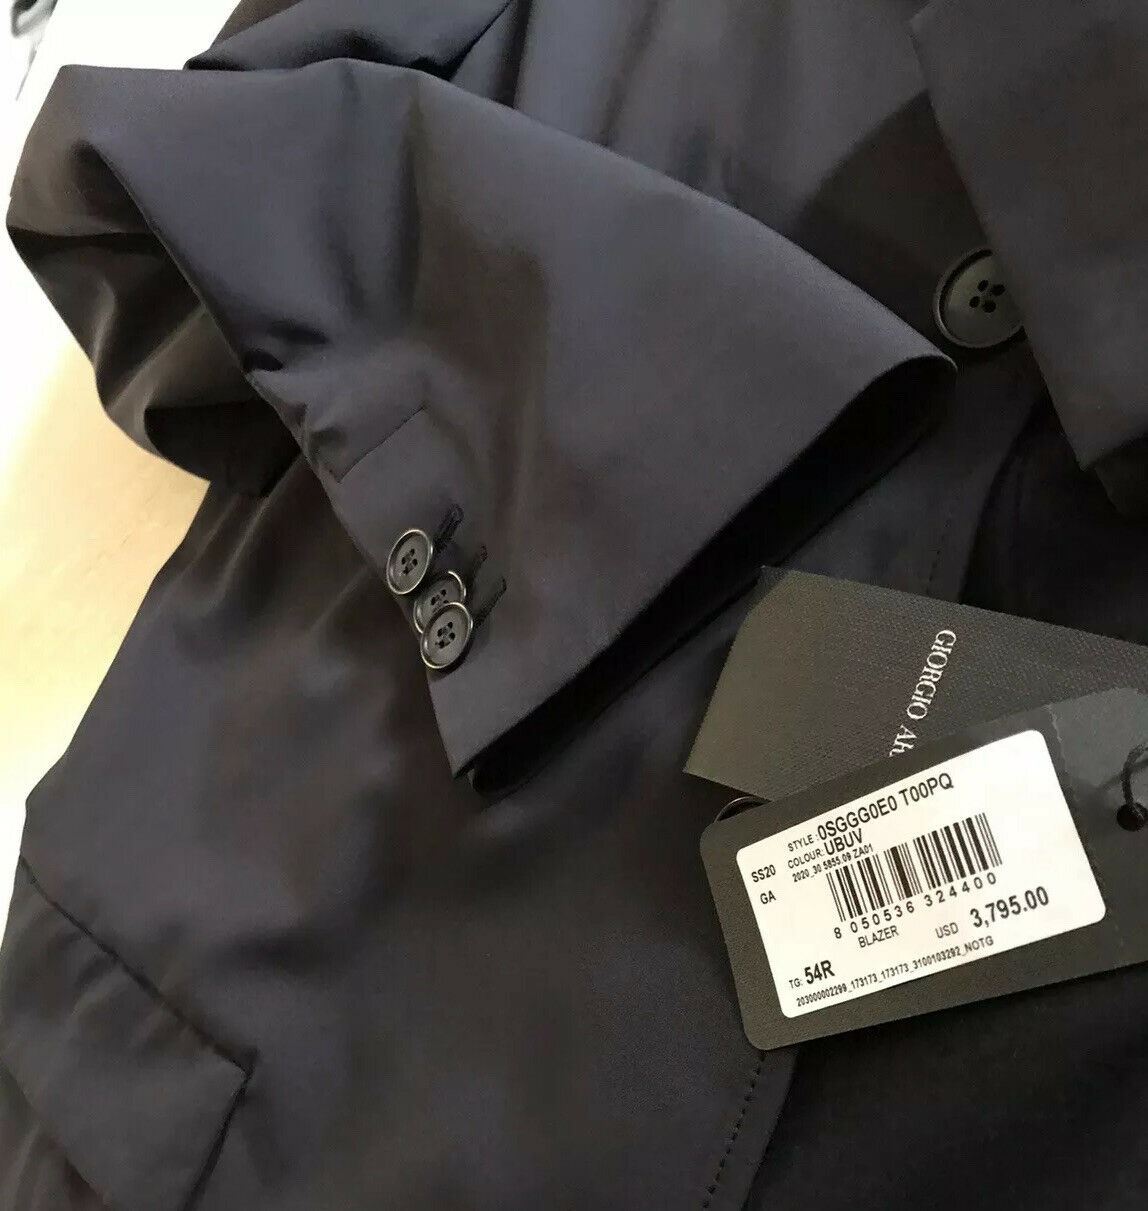 СЗТ $3795 Giorgio Armani Мужская куртка Блейзер Пальто Темно-синий 44R США/54R ЕС Италия